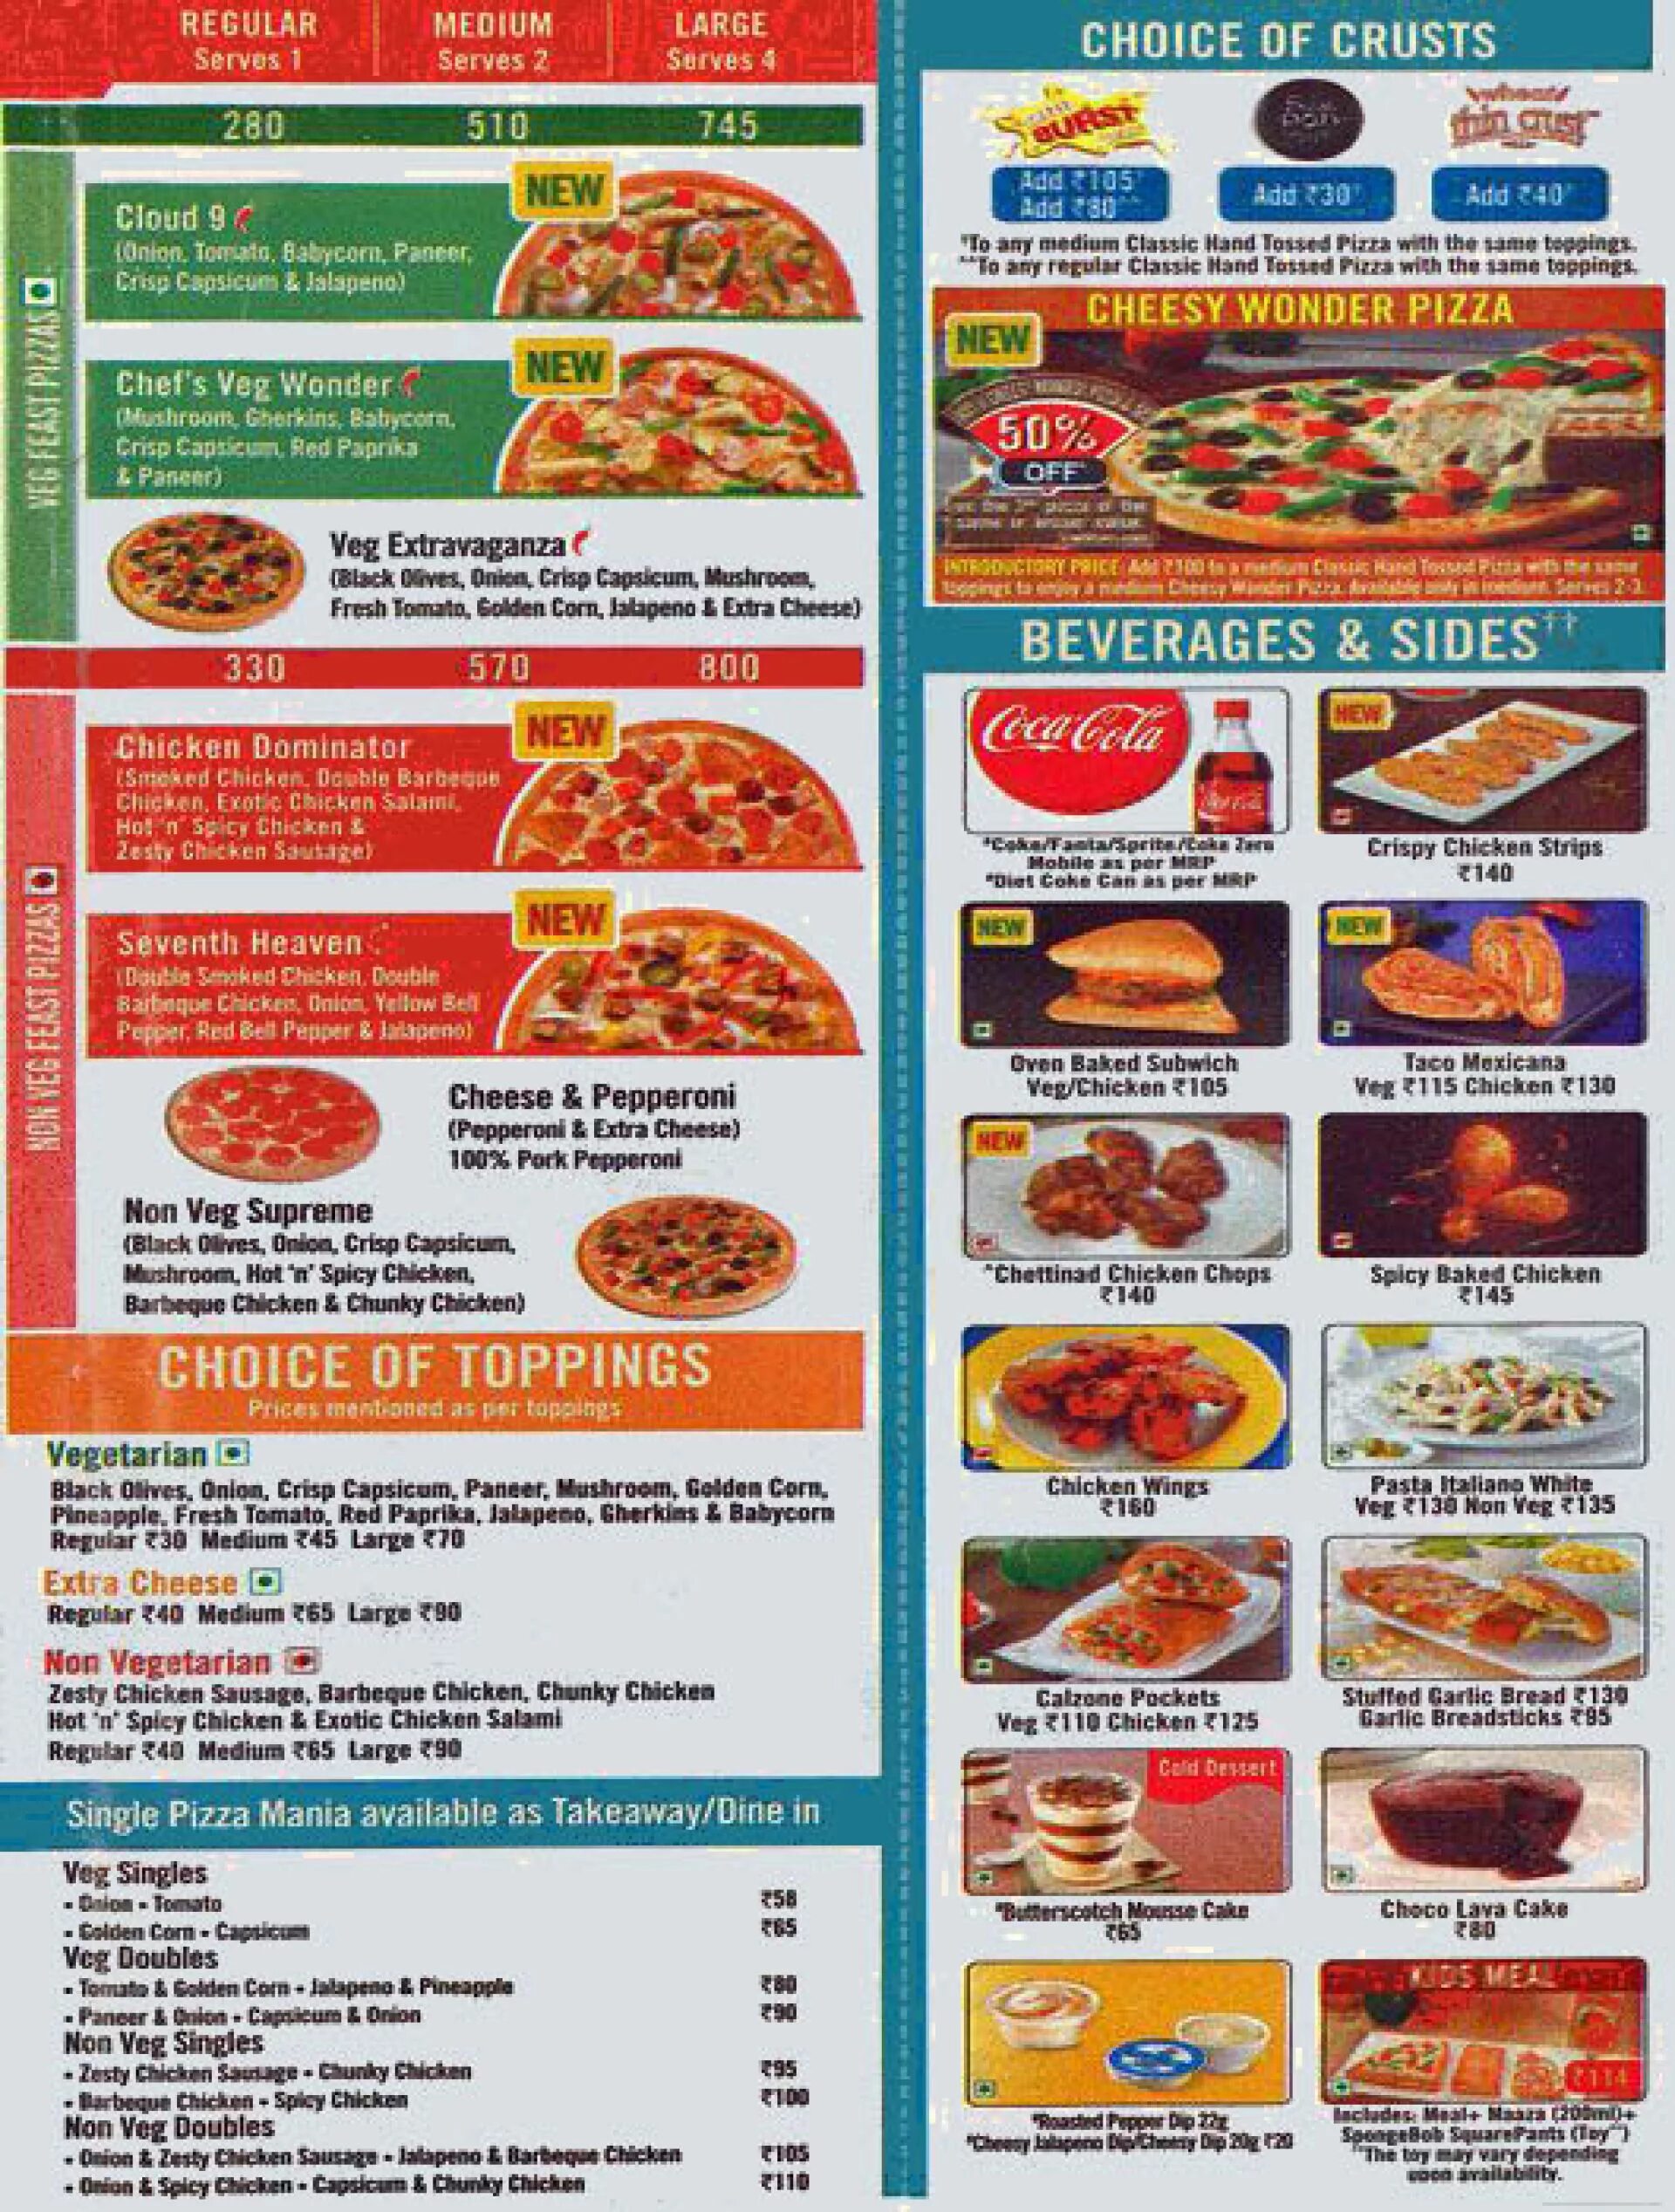 Домино пицца меню. Доминос меню. Доминос пицца Турция меню. Dominos USA menu. Domino's pizza menu.